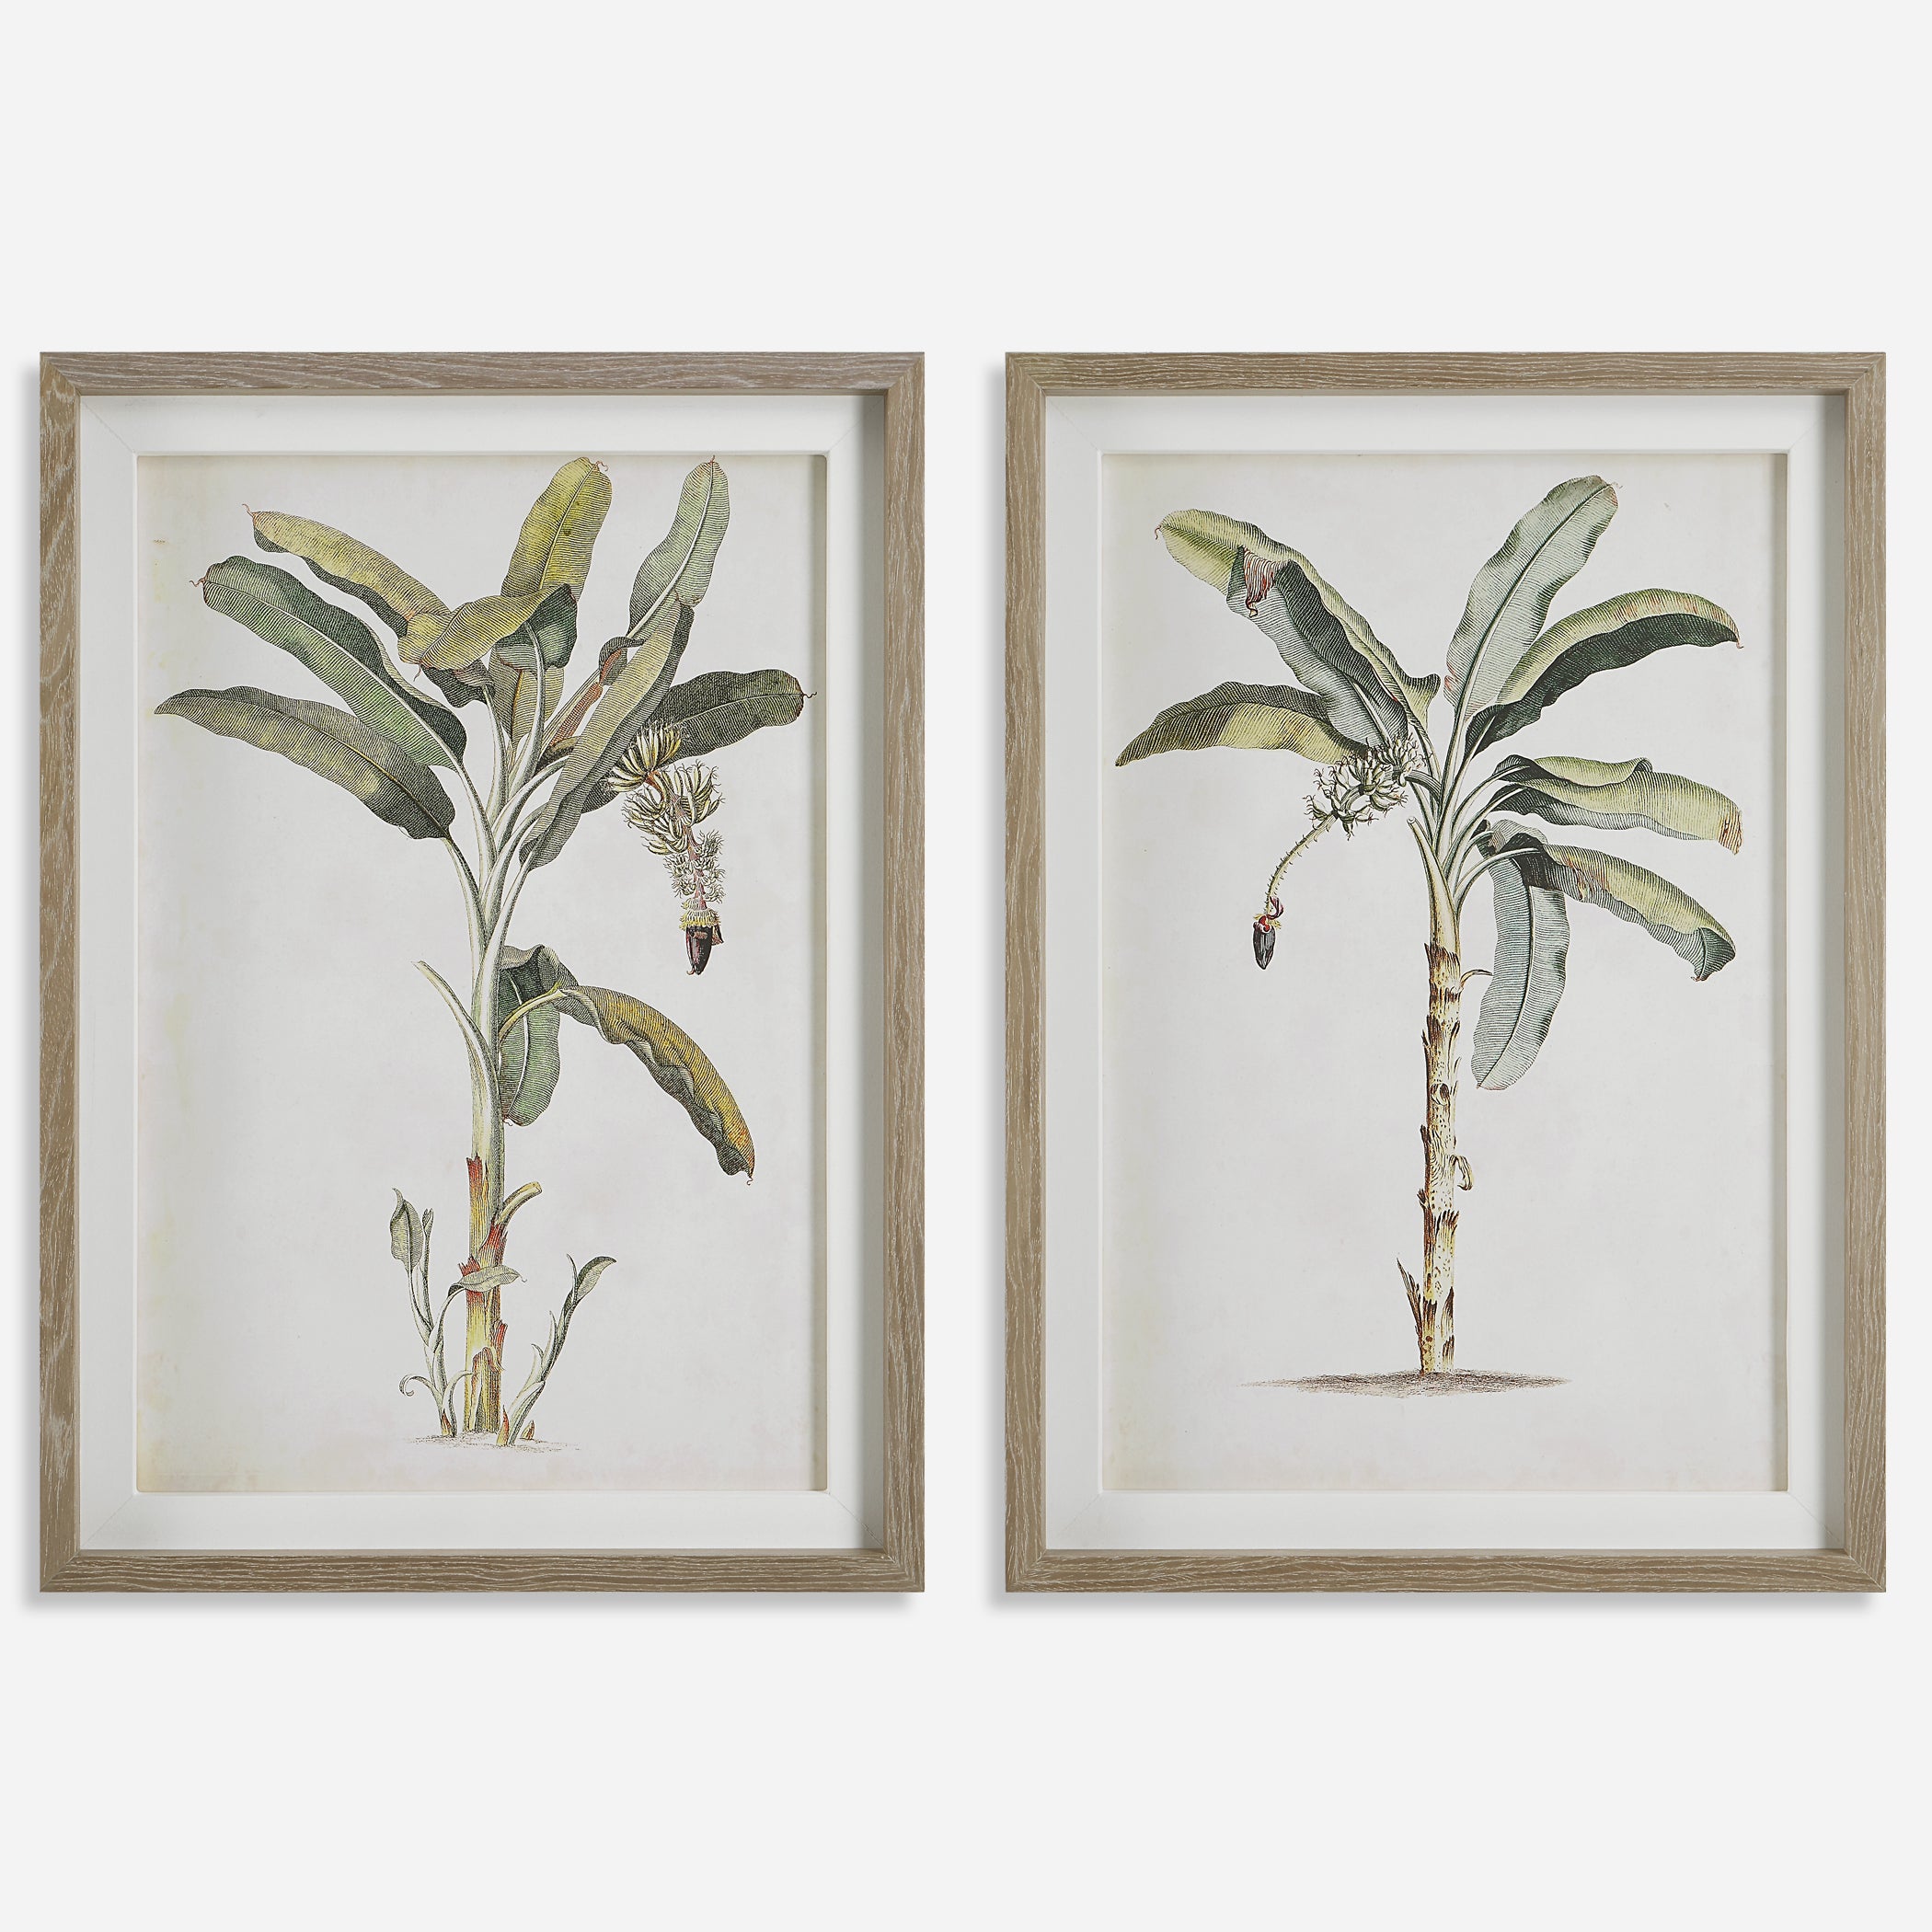 Uttermost Banana Palm Botanical Prints Botanical Prints Uttermost   